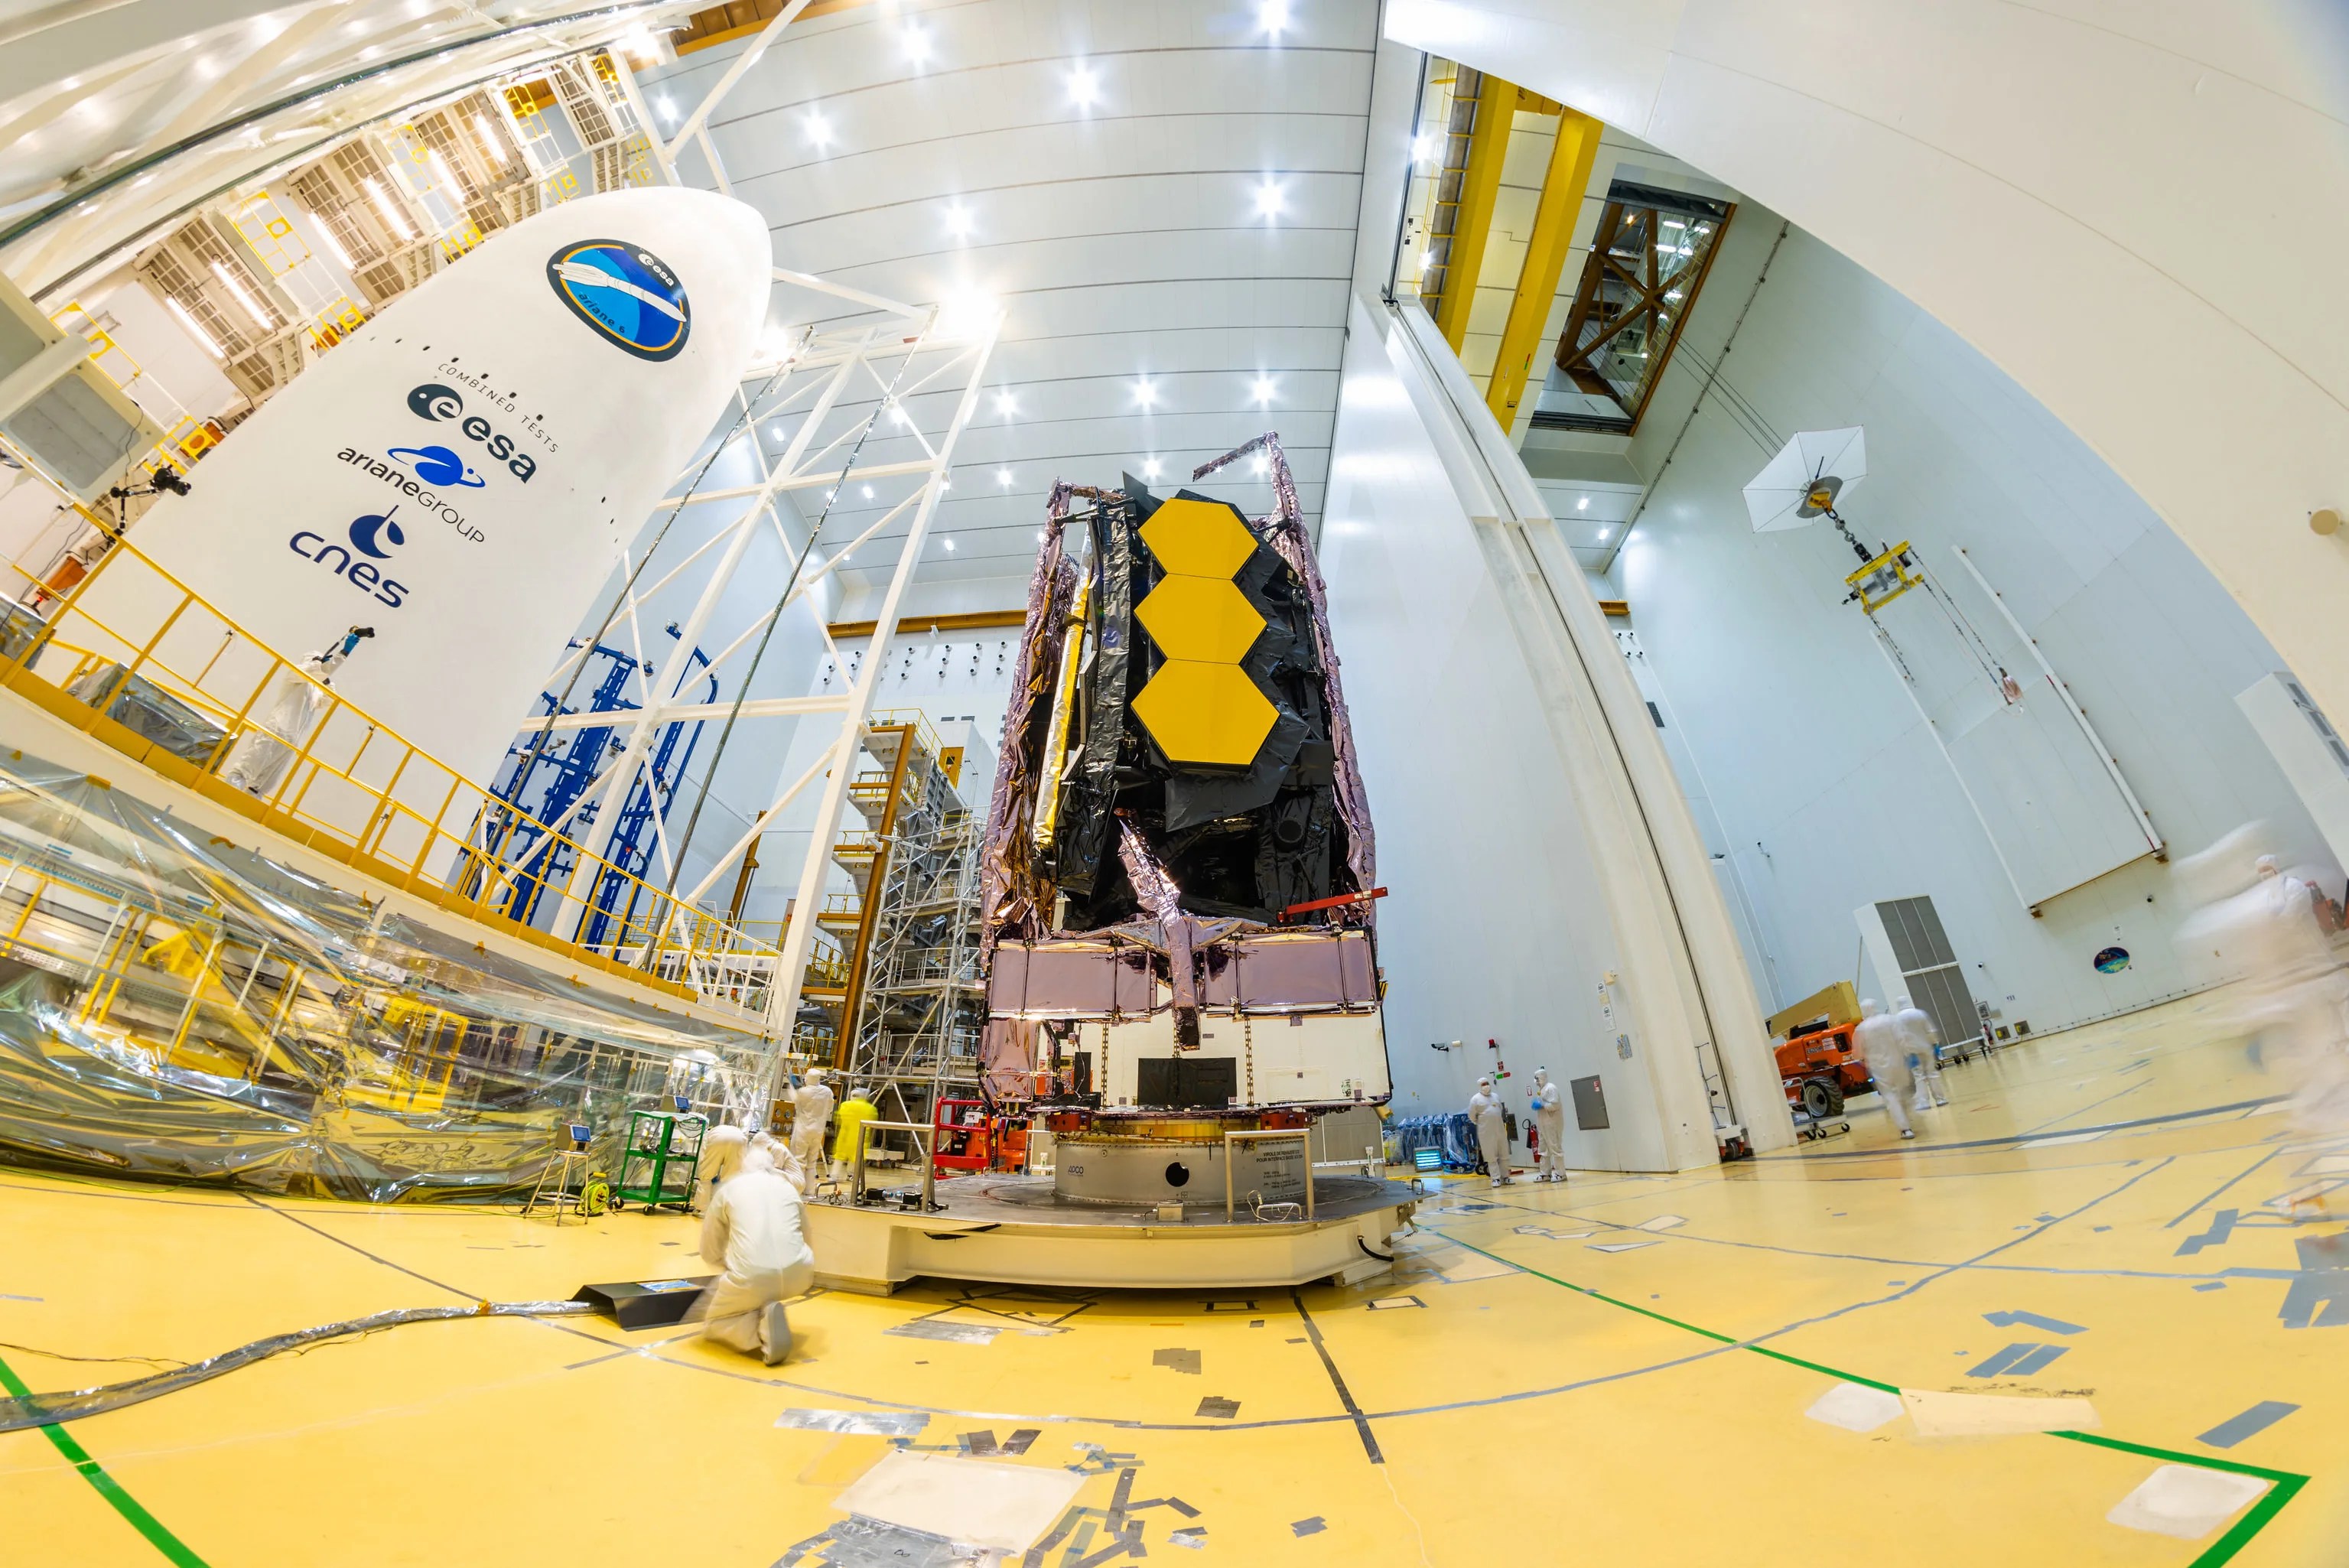 Engineer work on as Webb Placed on Top of Ariane 5